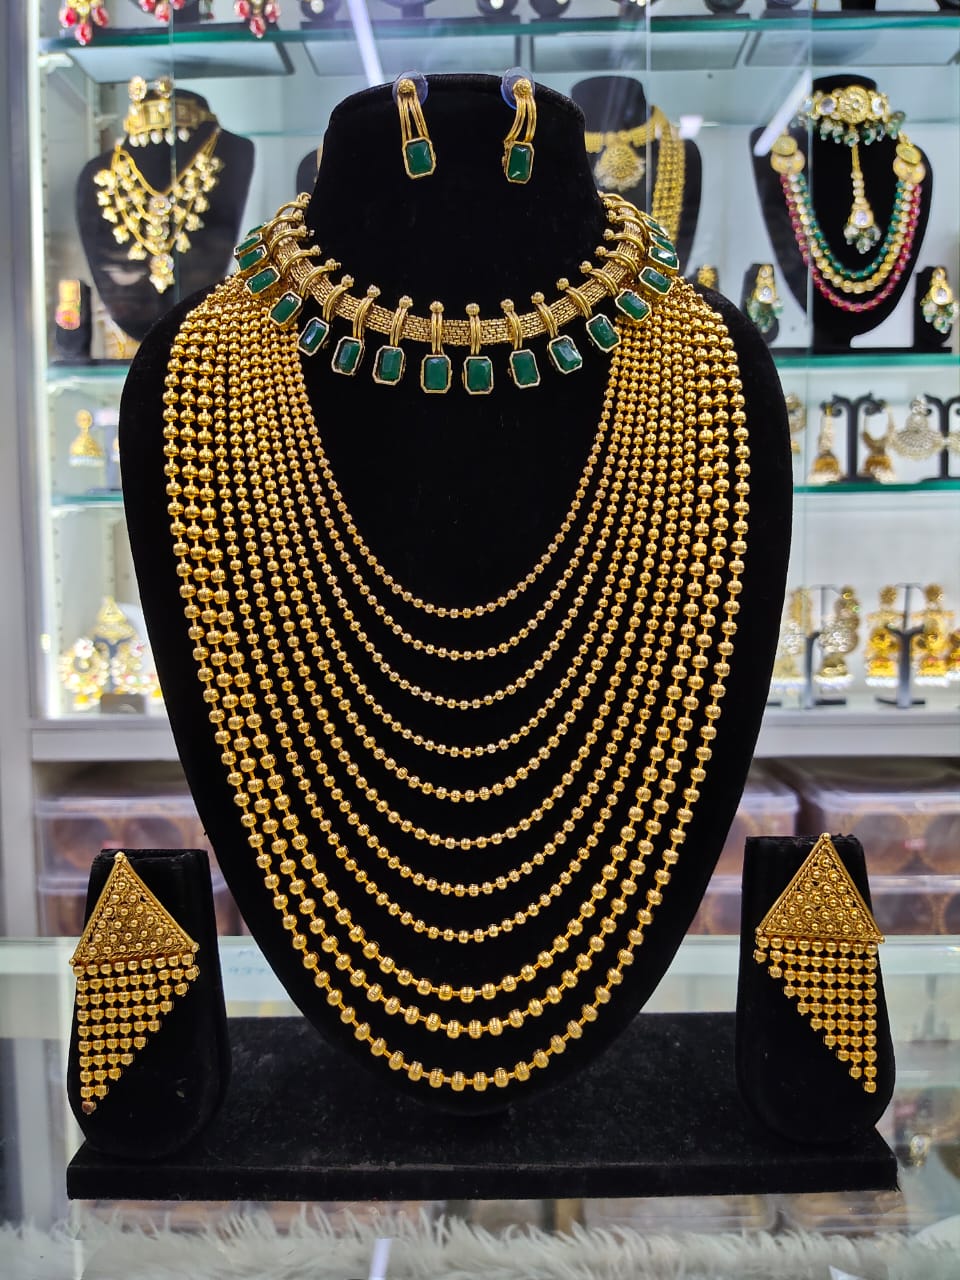 Buy Payal Jewellers Saree Pin | Gold Plated Sari Brooch | Safety Pin for Nauvari  Saree, Lehanaga, Dressing Brooch Pin | Wedding Jewellery For Women & Girls  - Set of 1 at Amazon.in